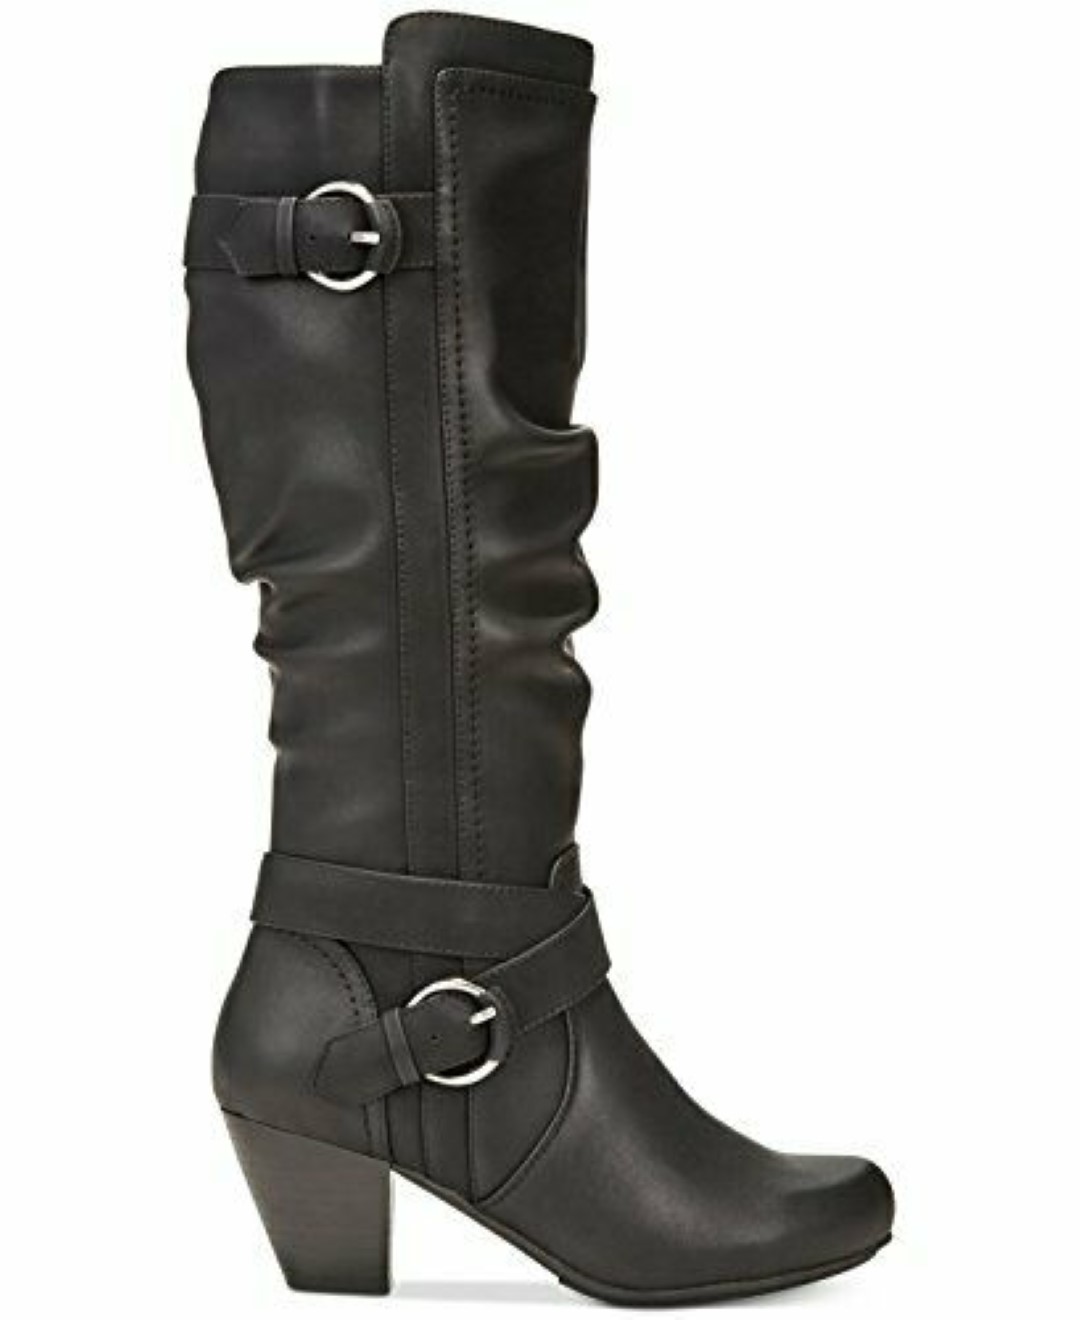 Rialto Womens Crystal Closed Toe Knee High Fashion Boots, Black, Size 7 ...